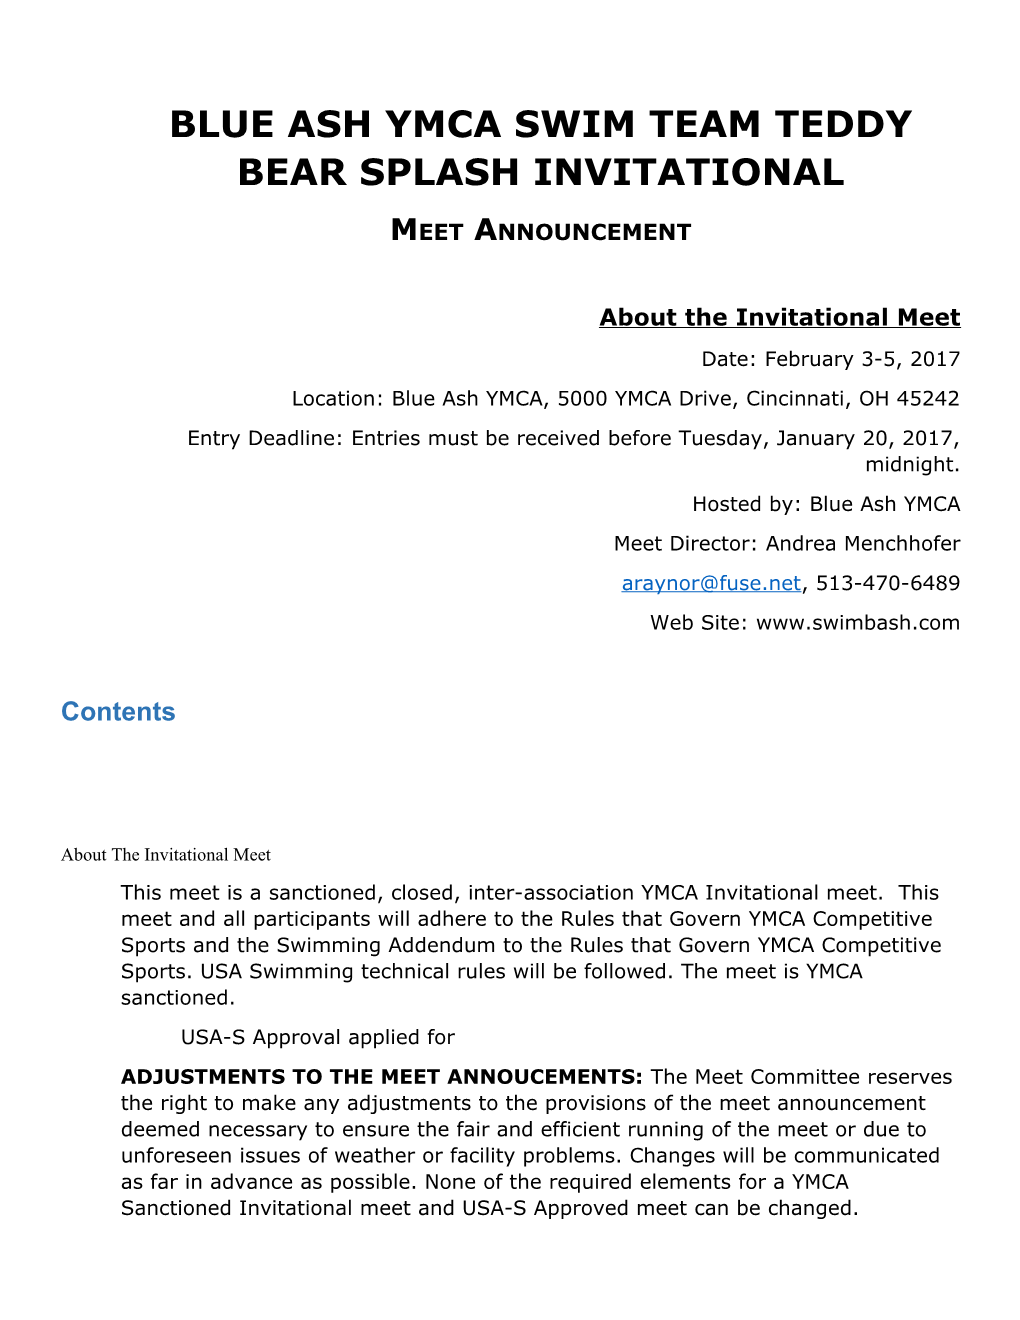 Blue Ash Ymca Swim Team Teddy Bear Splash Invitational